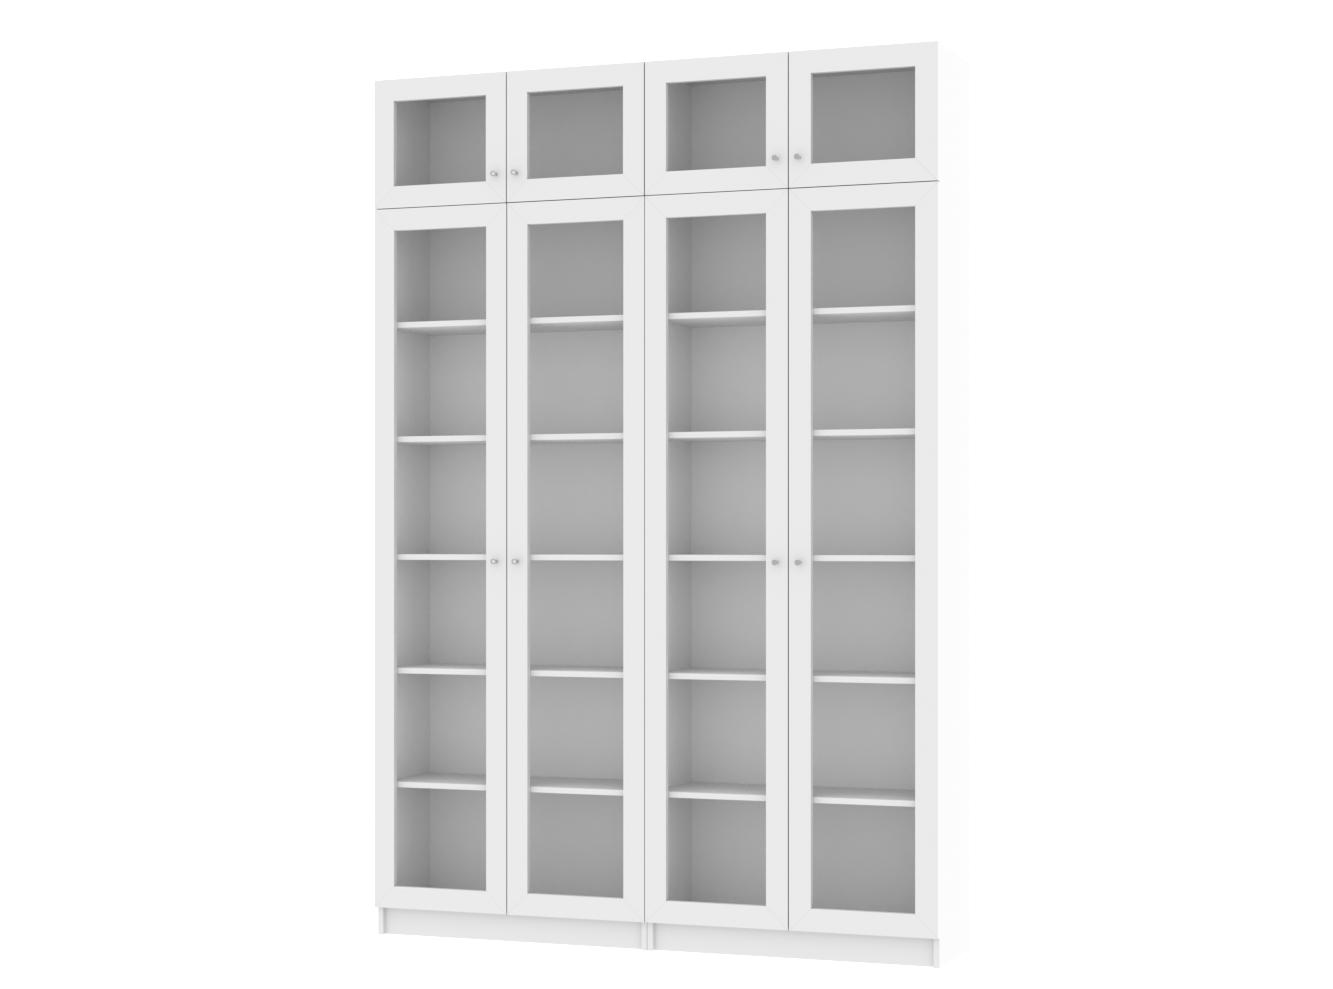  Книжный шкаф Билли 395 white ИКЕА (IKEA) изображение товара